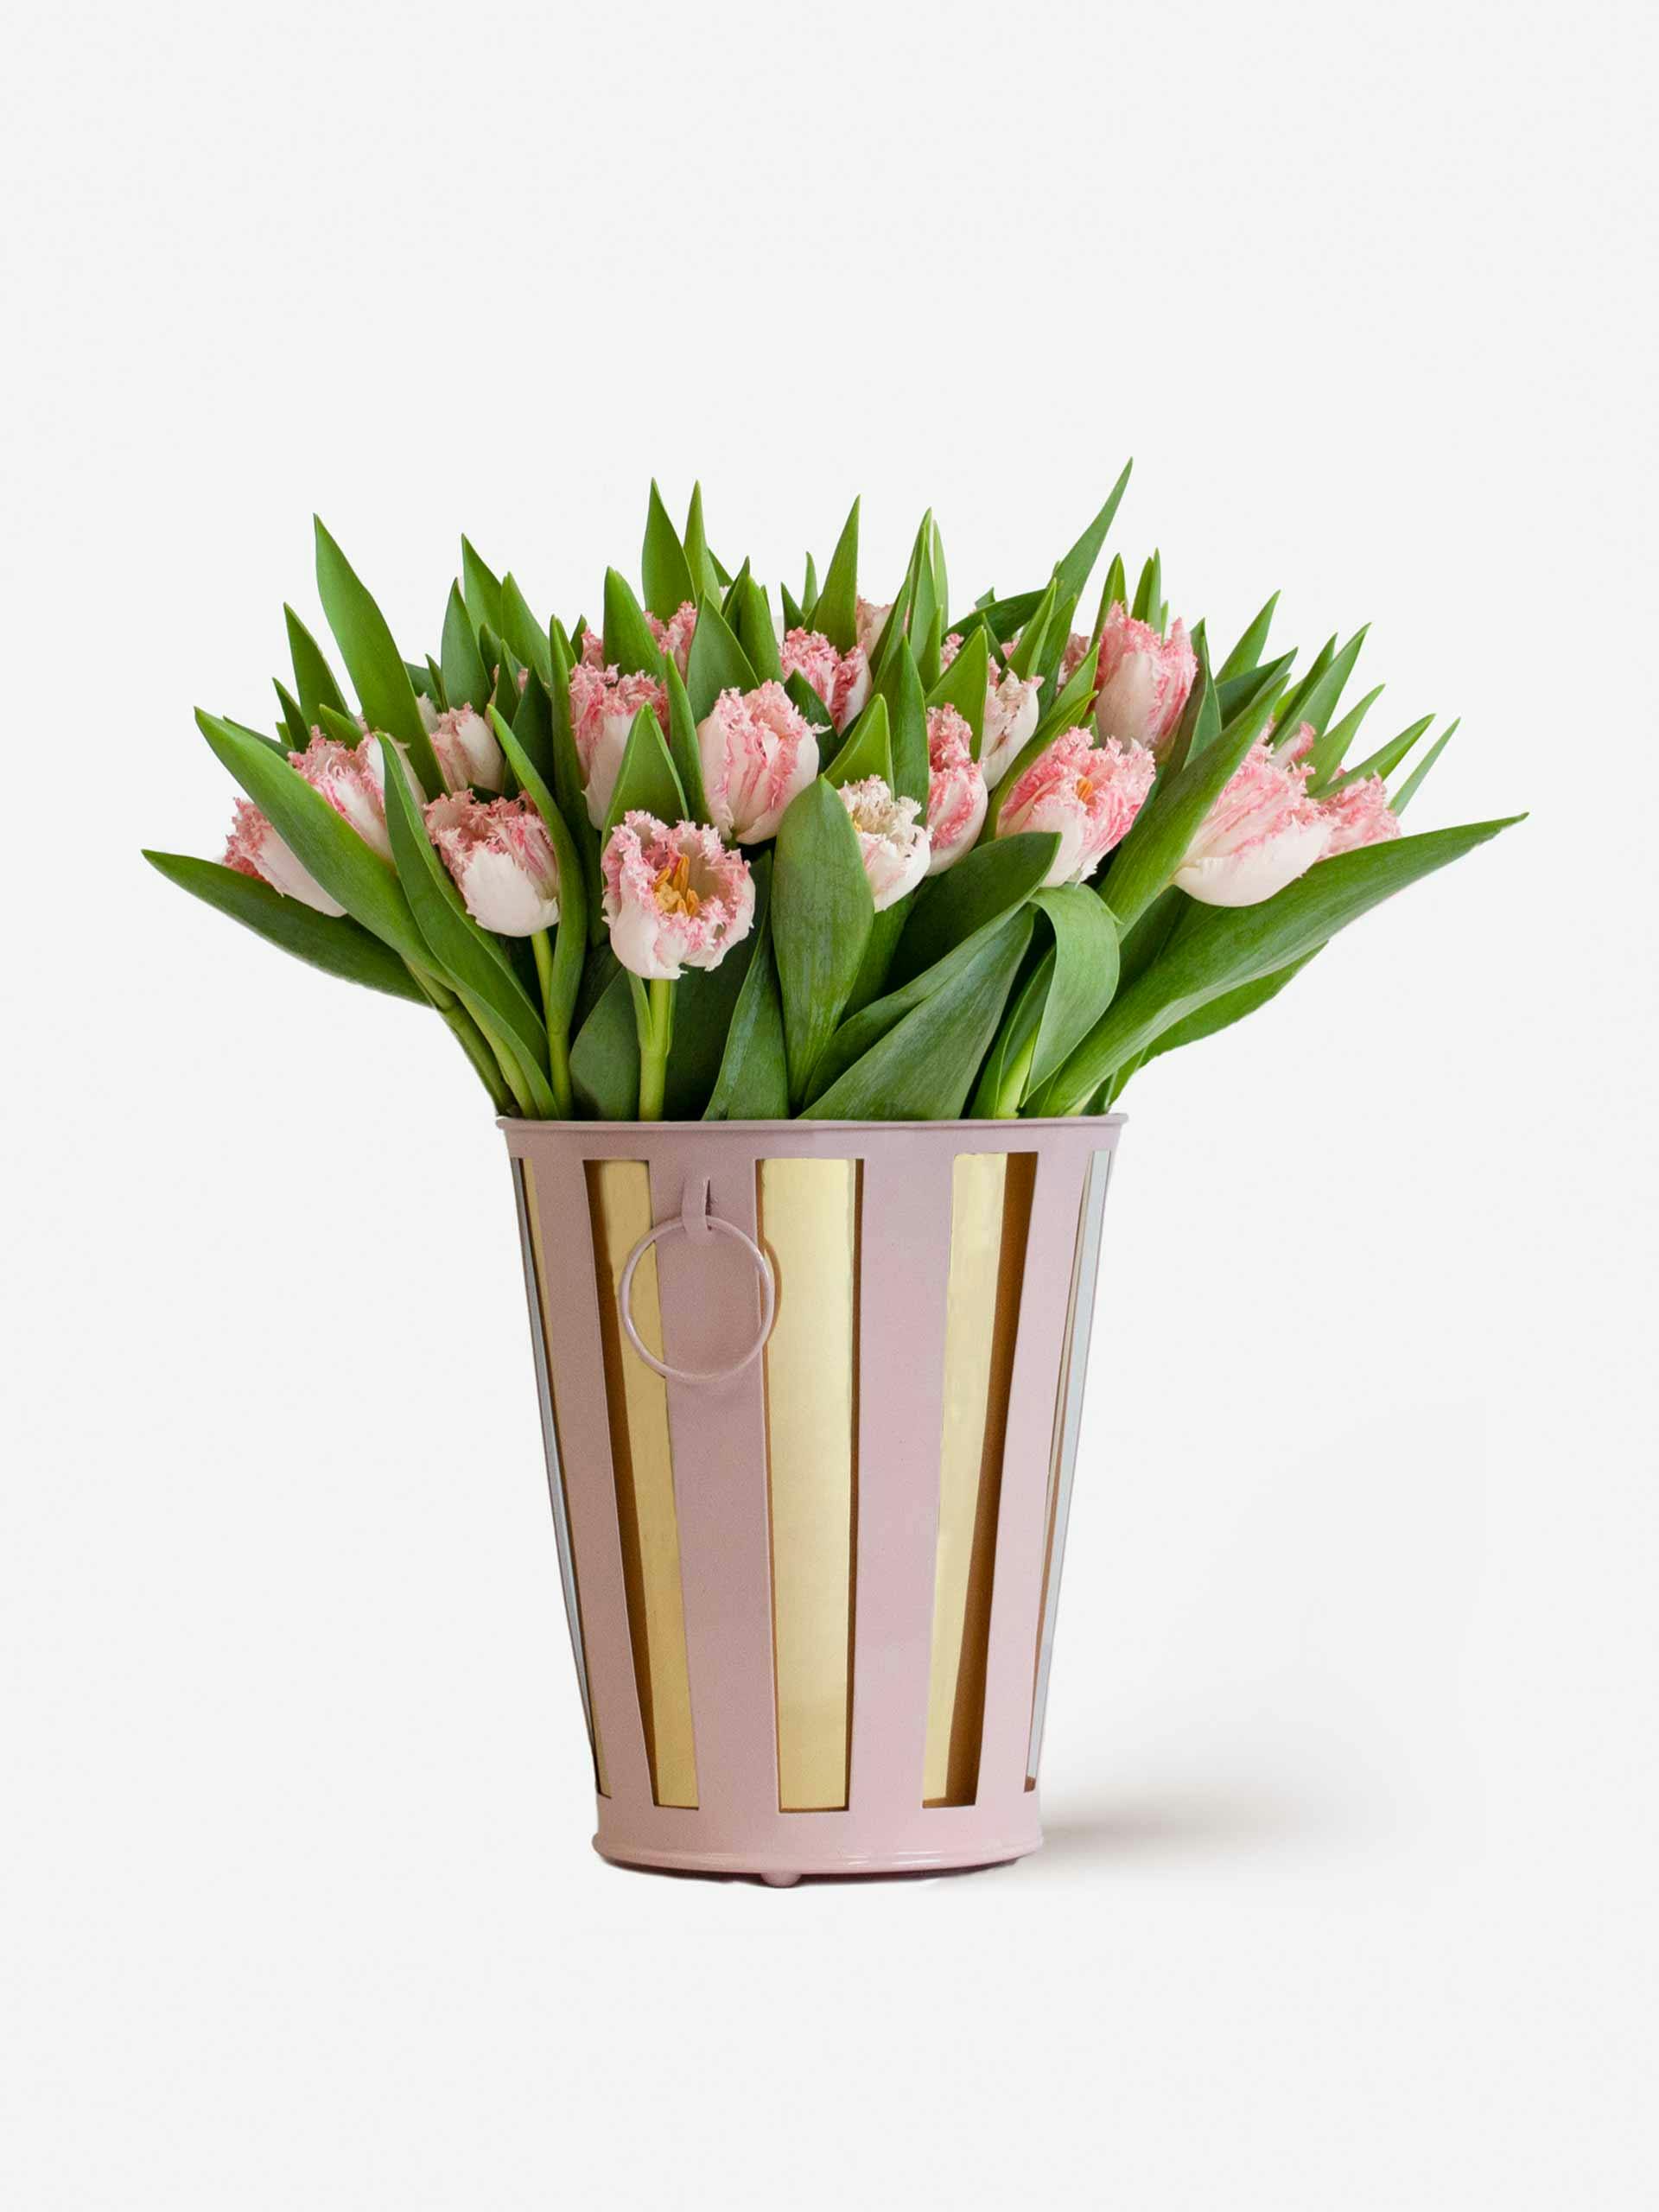 Tulip planter set with 50 stems